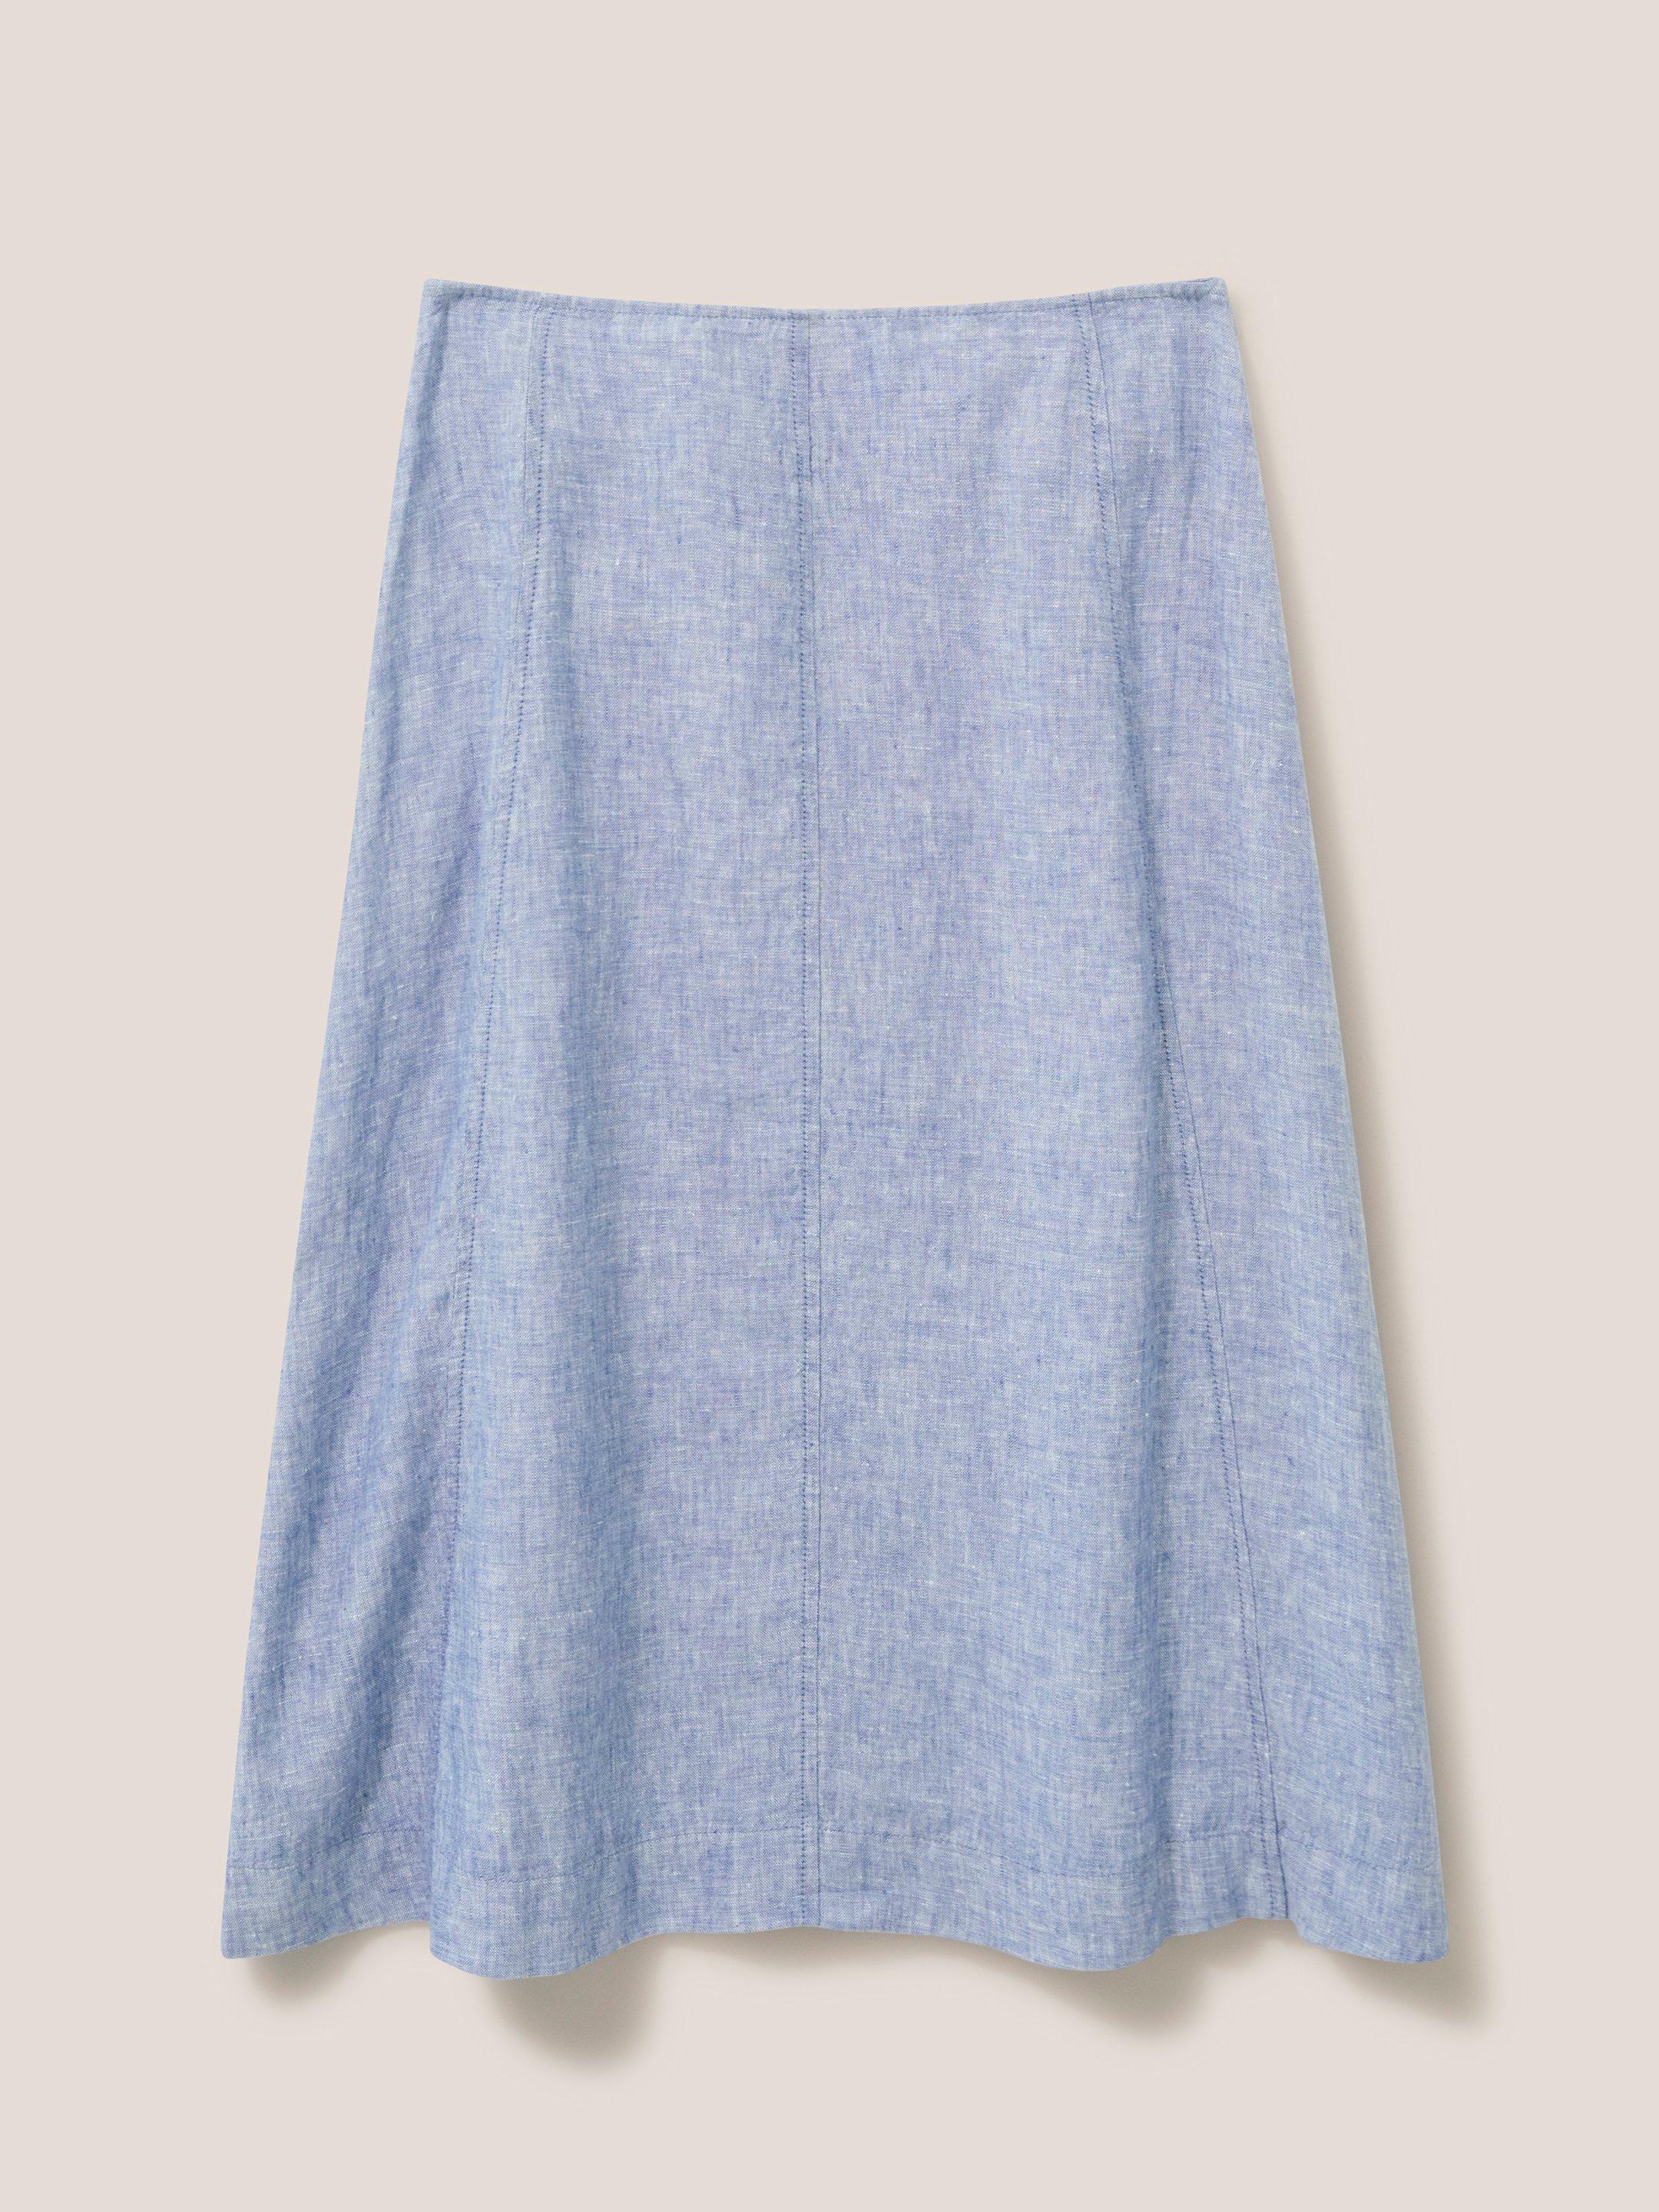 Ciara Linen Skirt in CHAMB BLUE - FLAT BACK